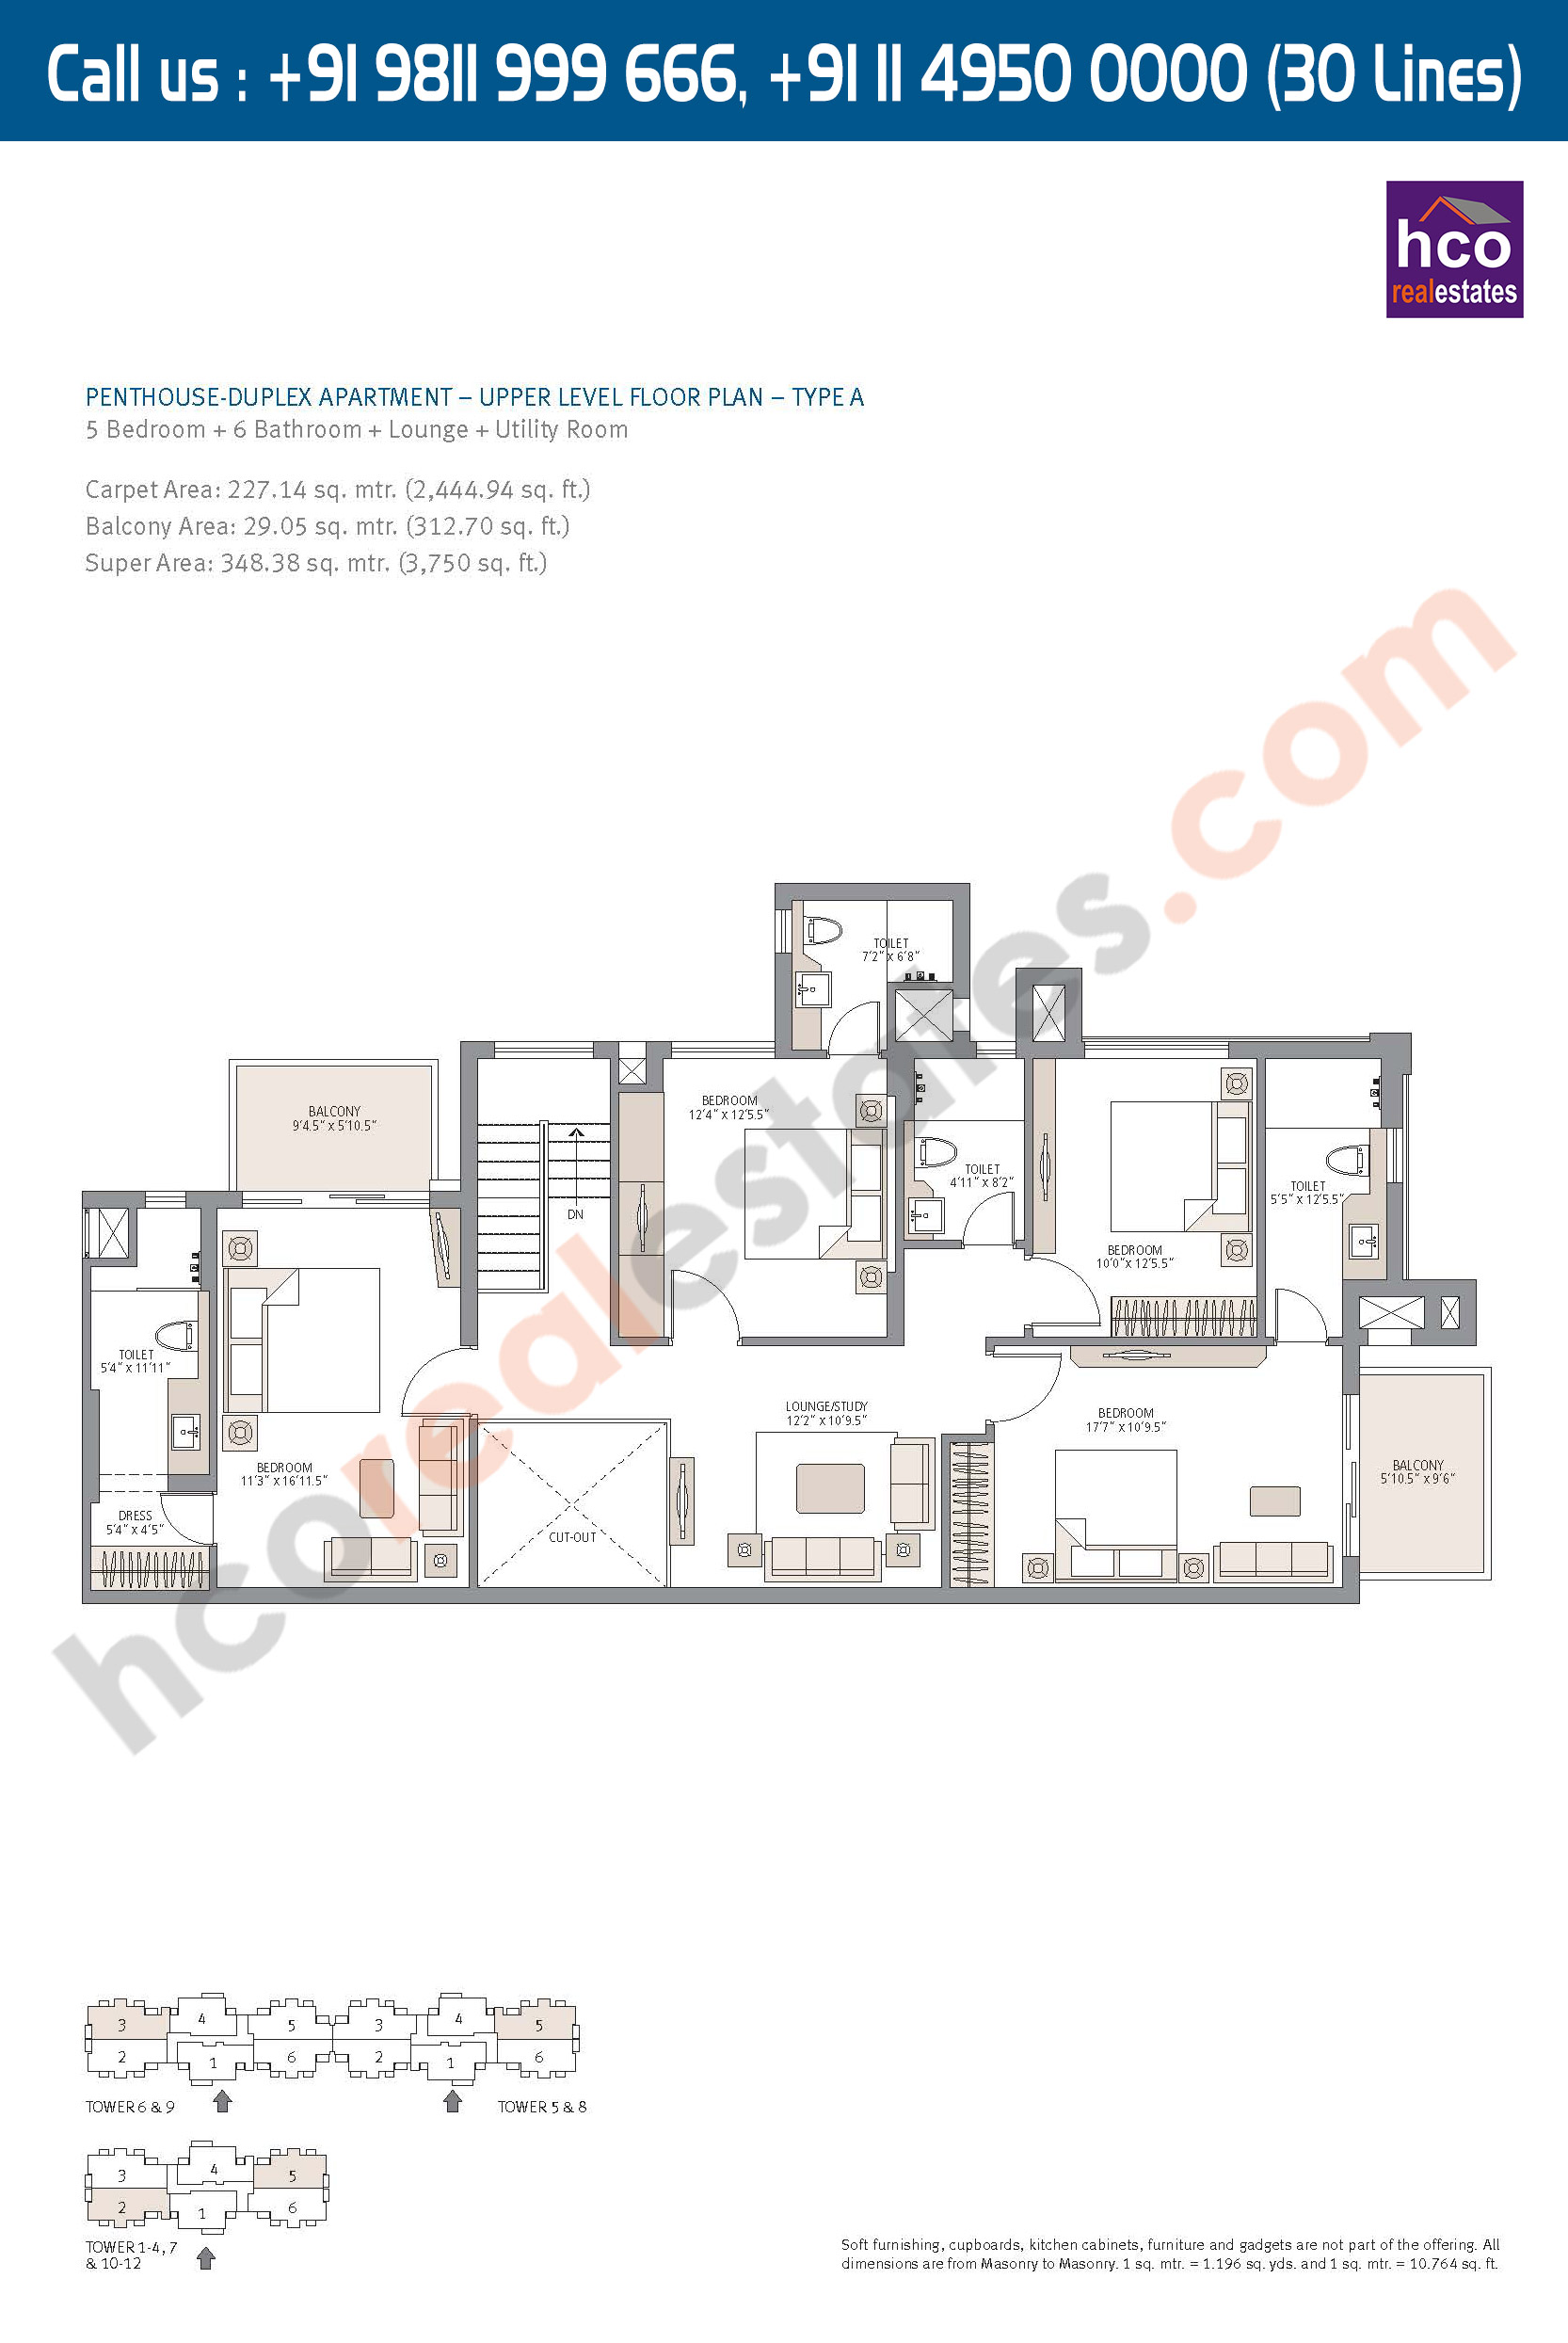 Upper Level Floor Plan, Penthouse Duplex, Apartment Carpet, Area: 2445 Sq. Ft.